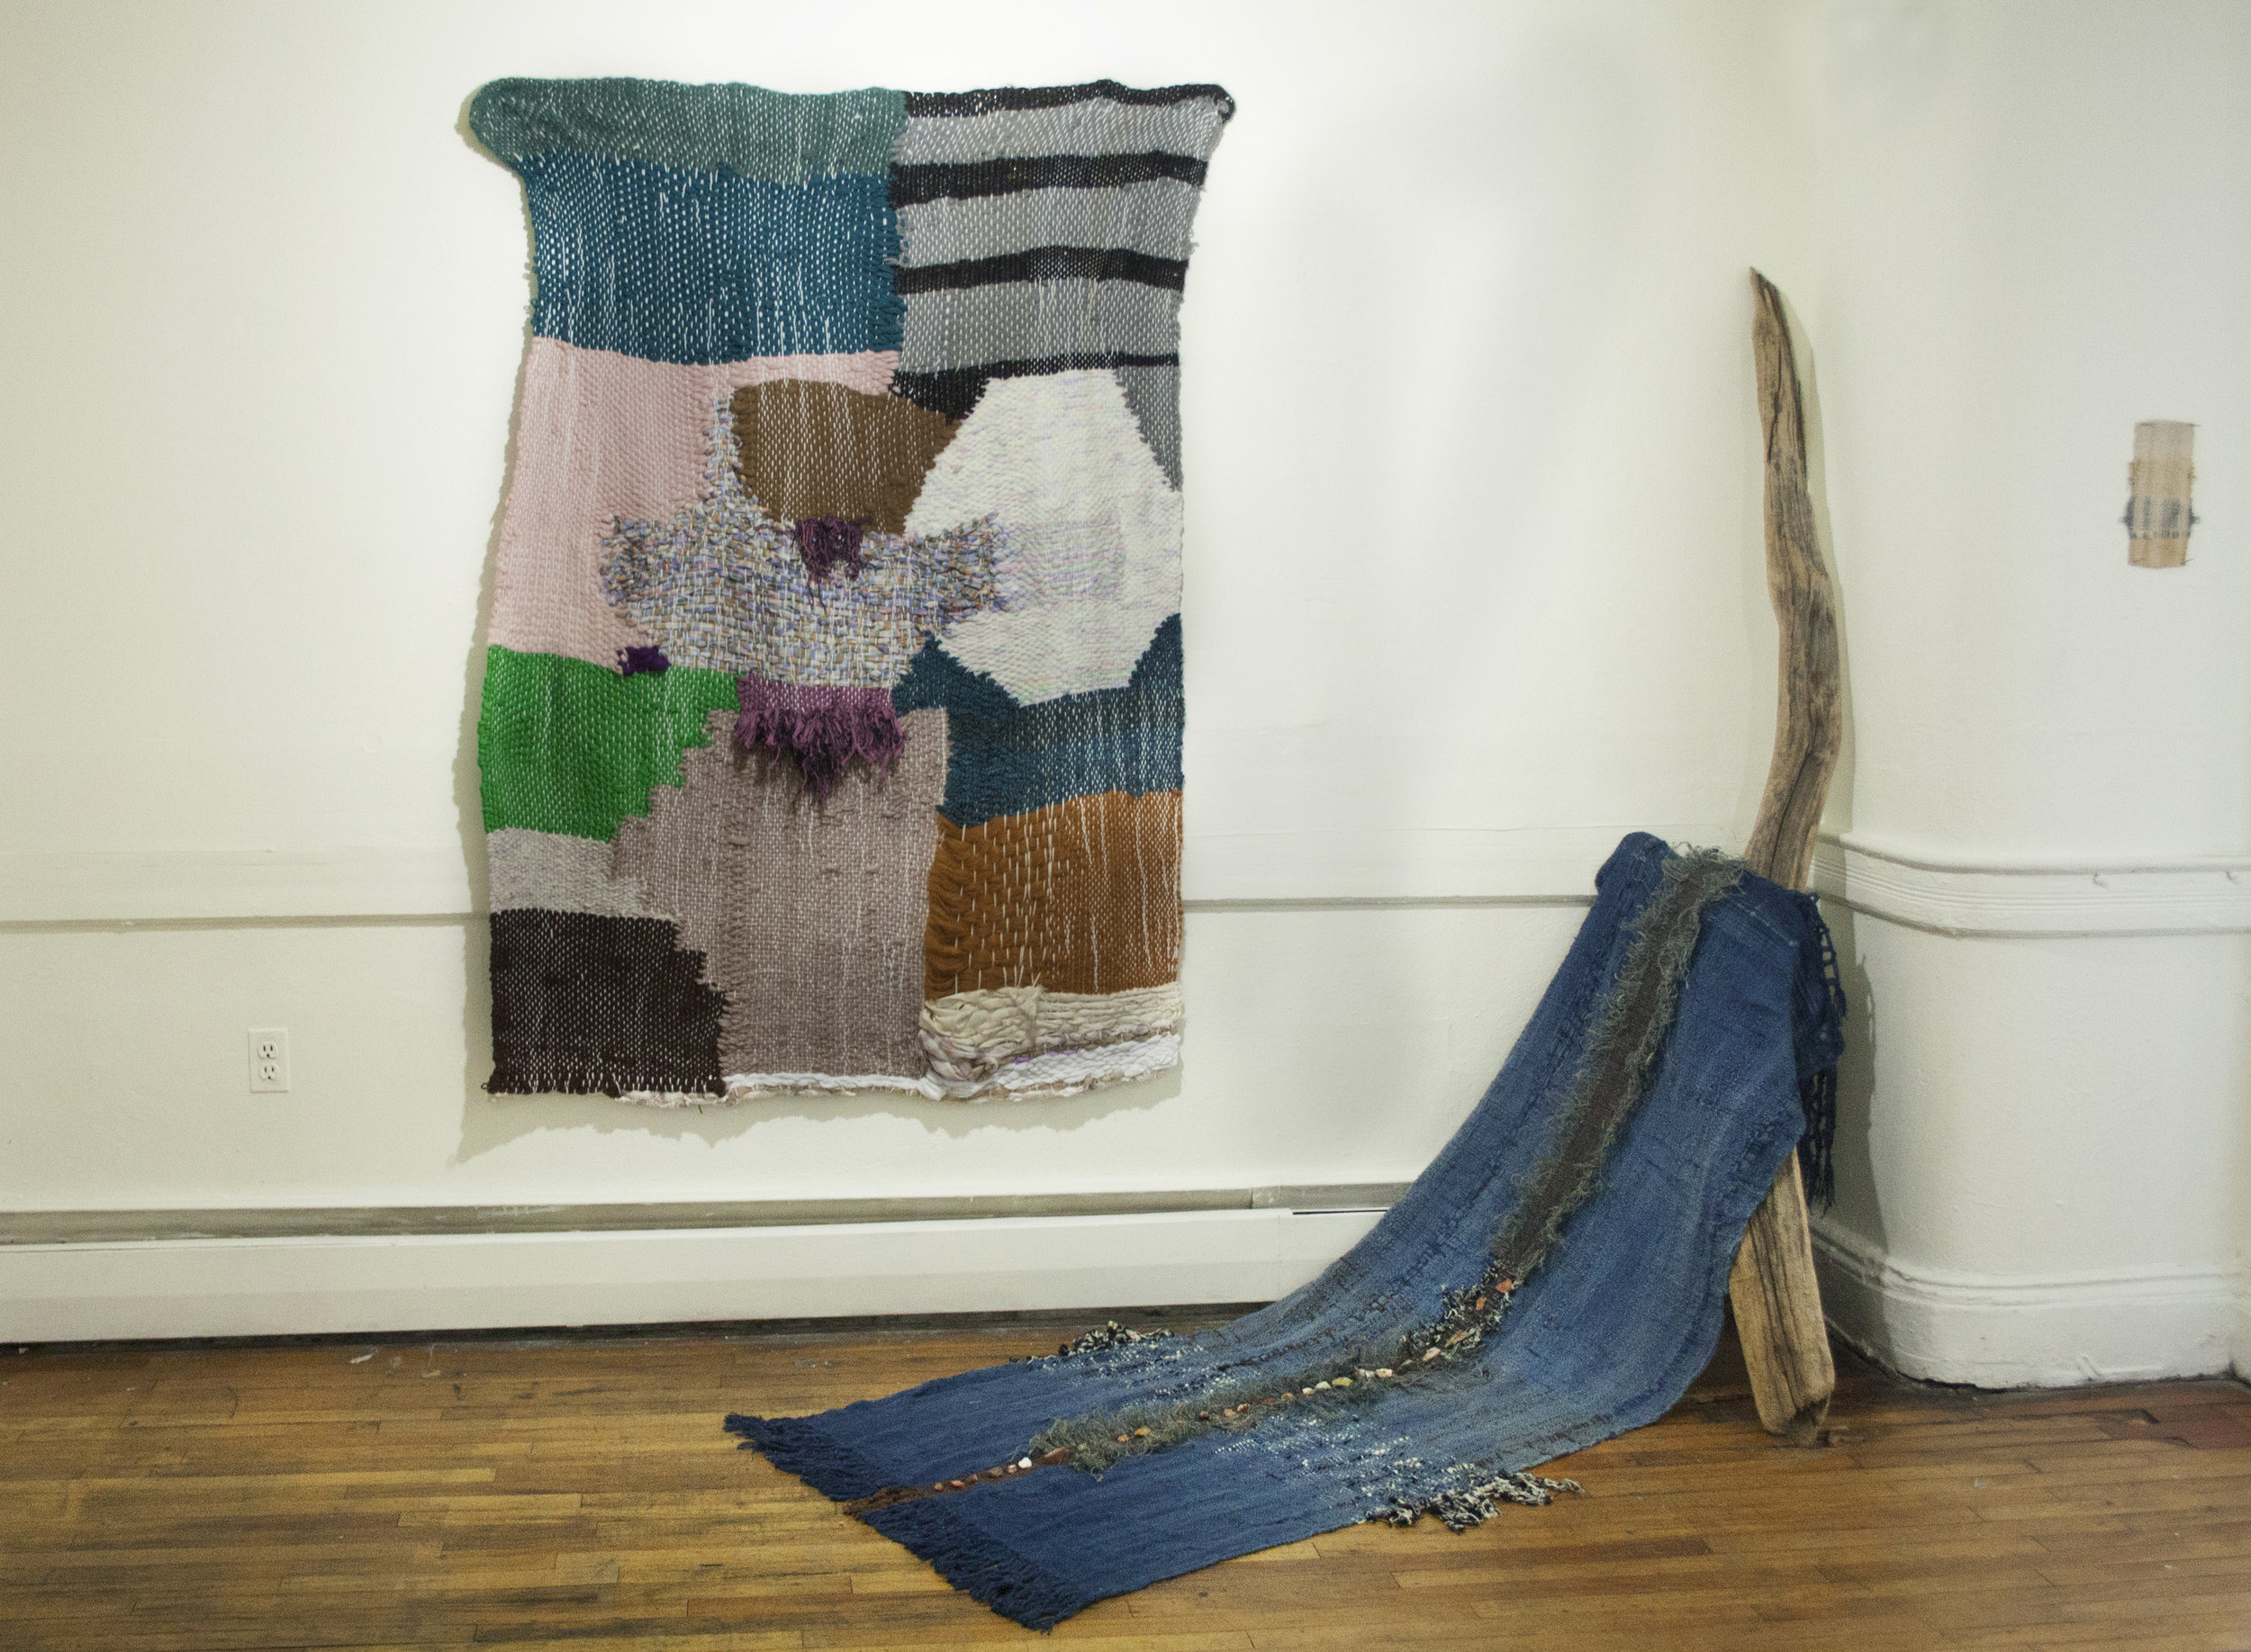   shield alternate   tapestry weaving 4.5x6'    big creek, high desert   hand weaving, burlap, indigo,&nbsp;rocks, driftwood 3x9’  